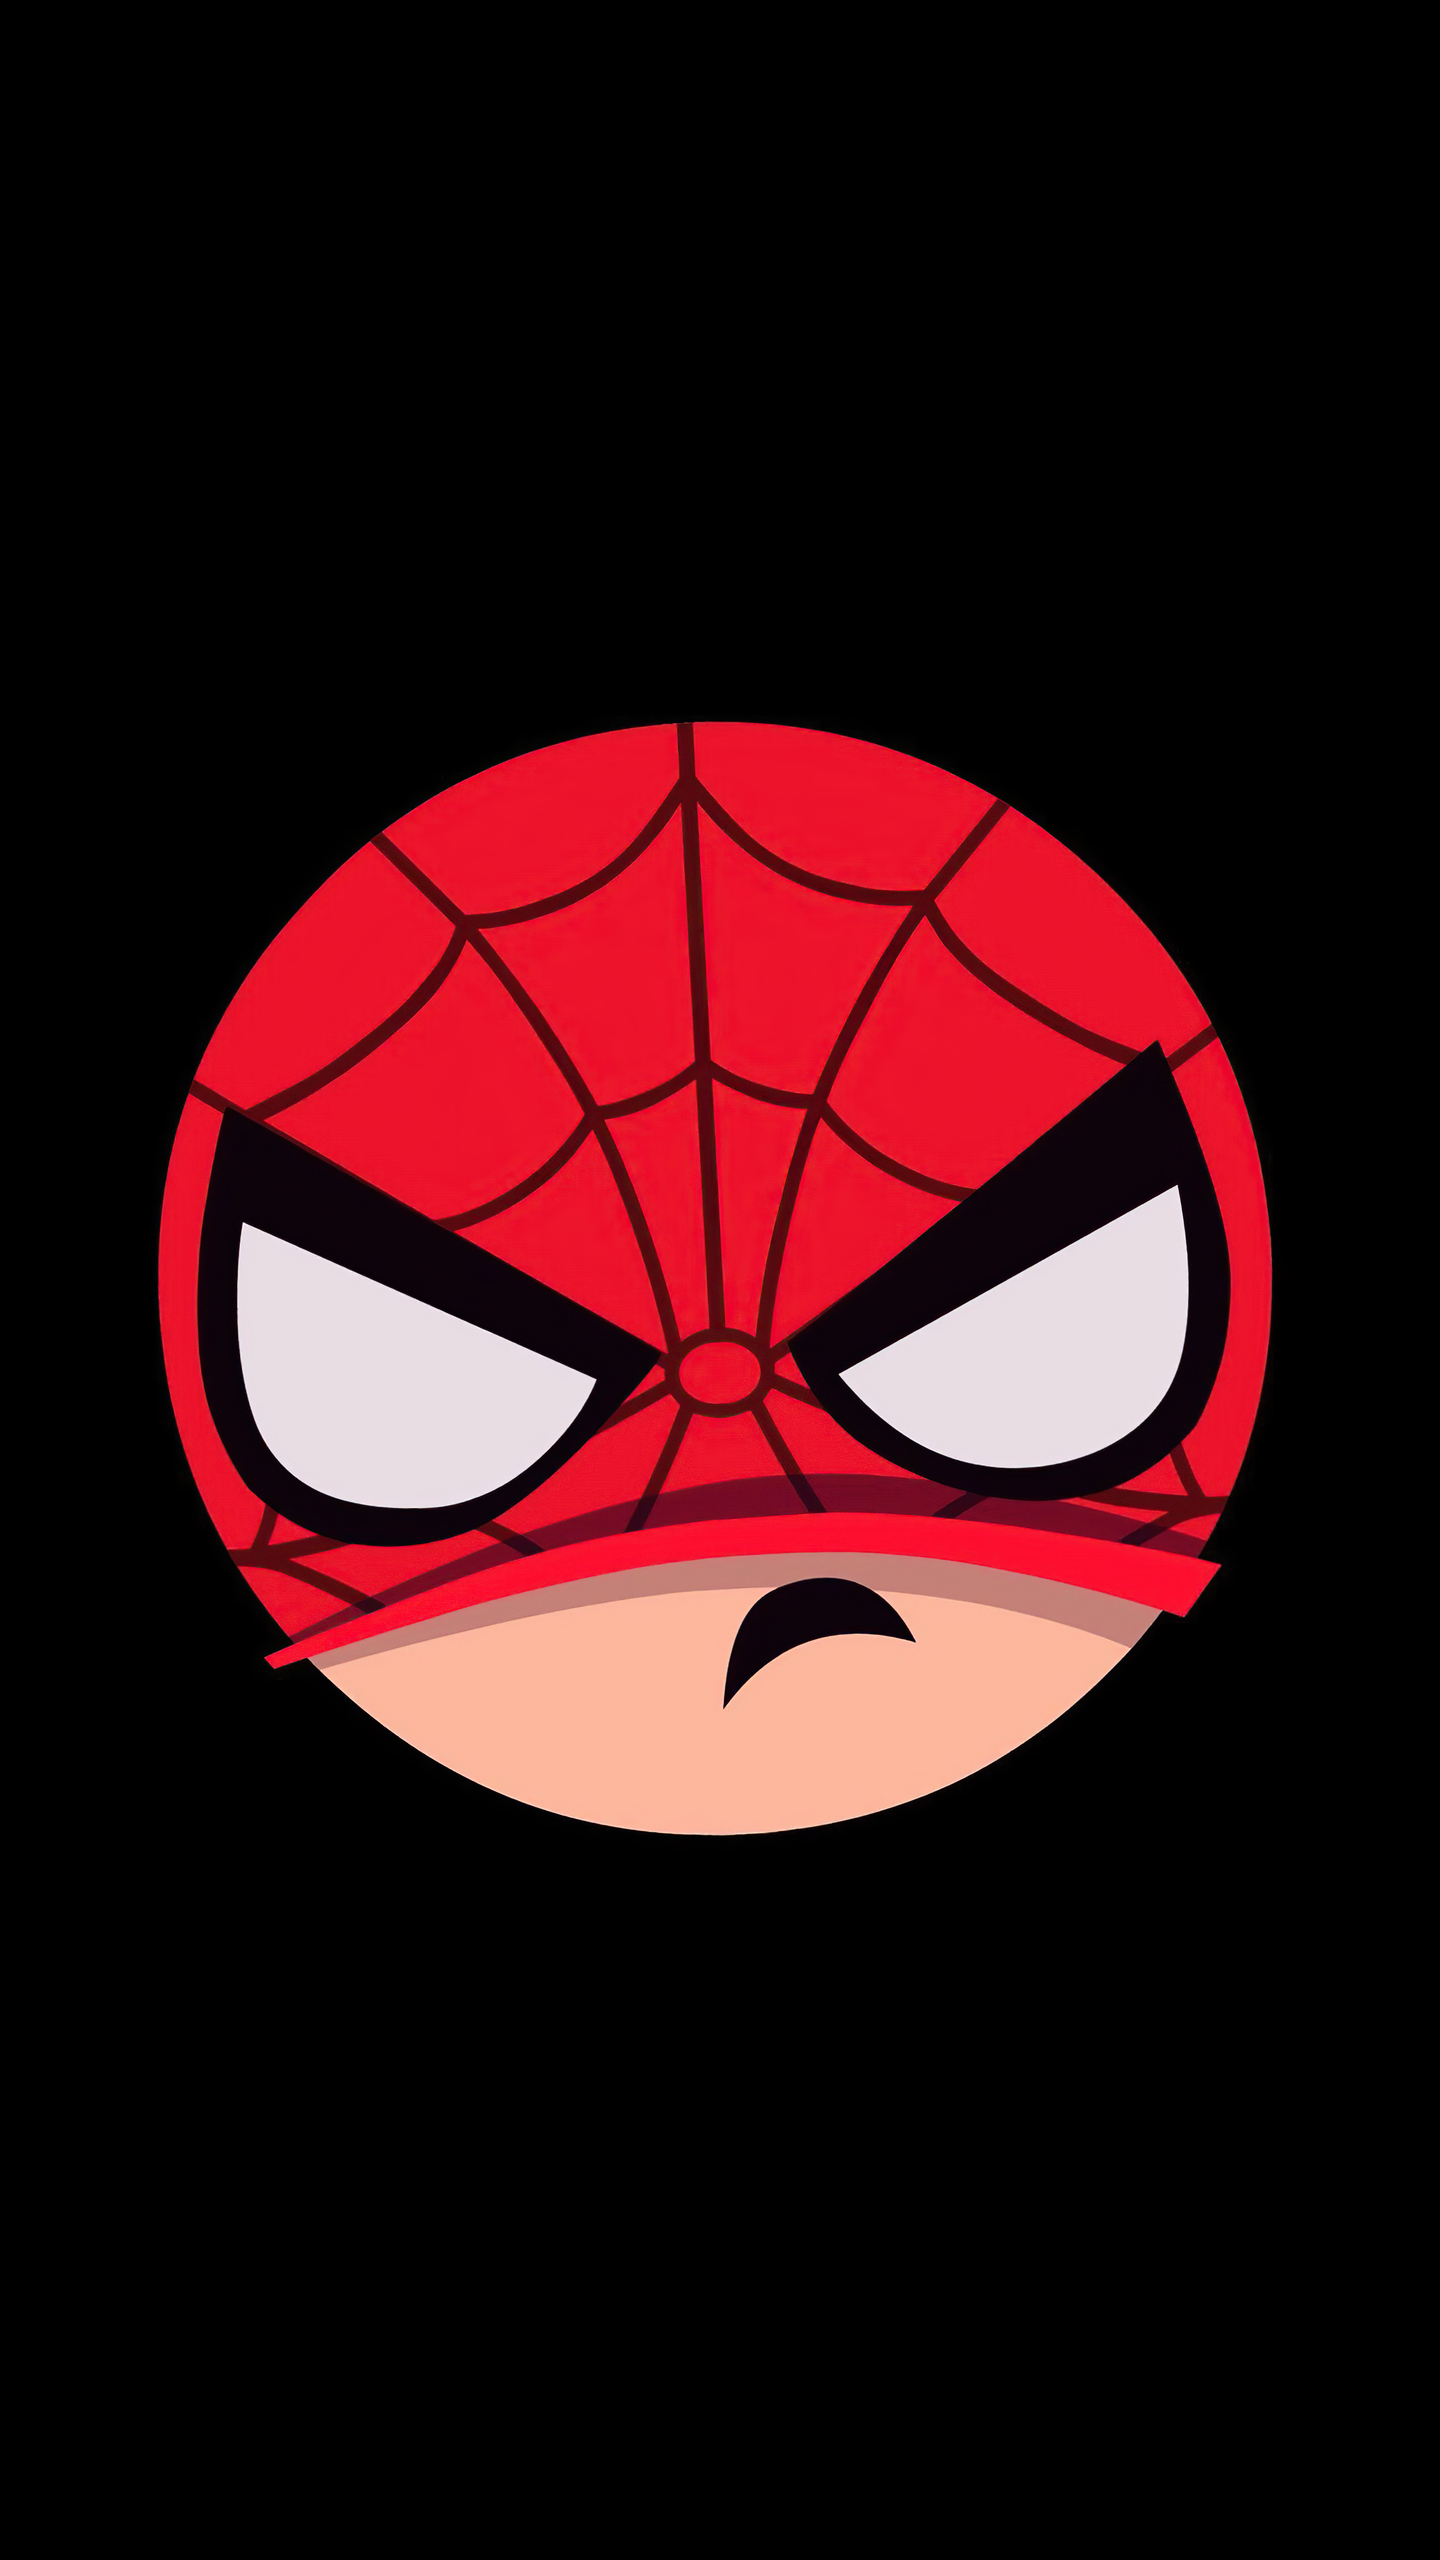 Spiderman Angry Minimal Badge Wallpaper